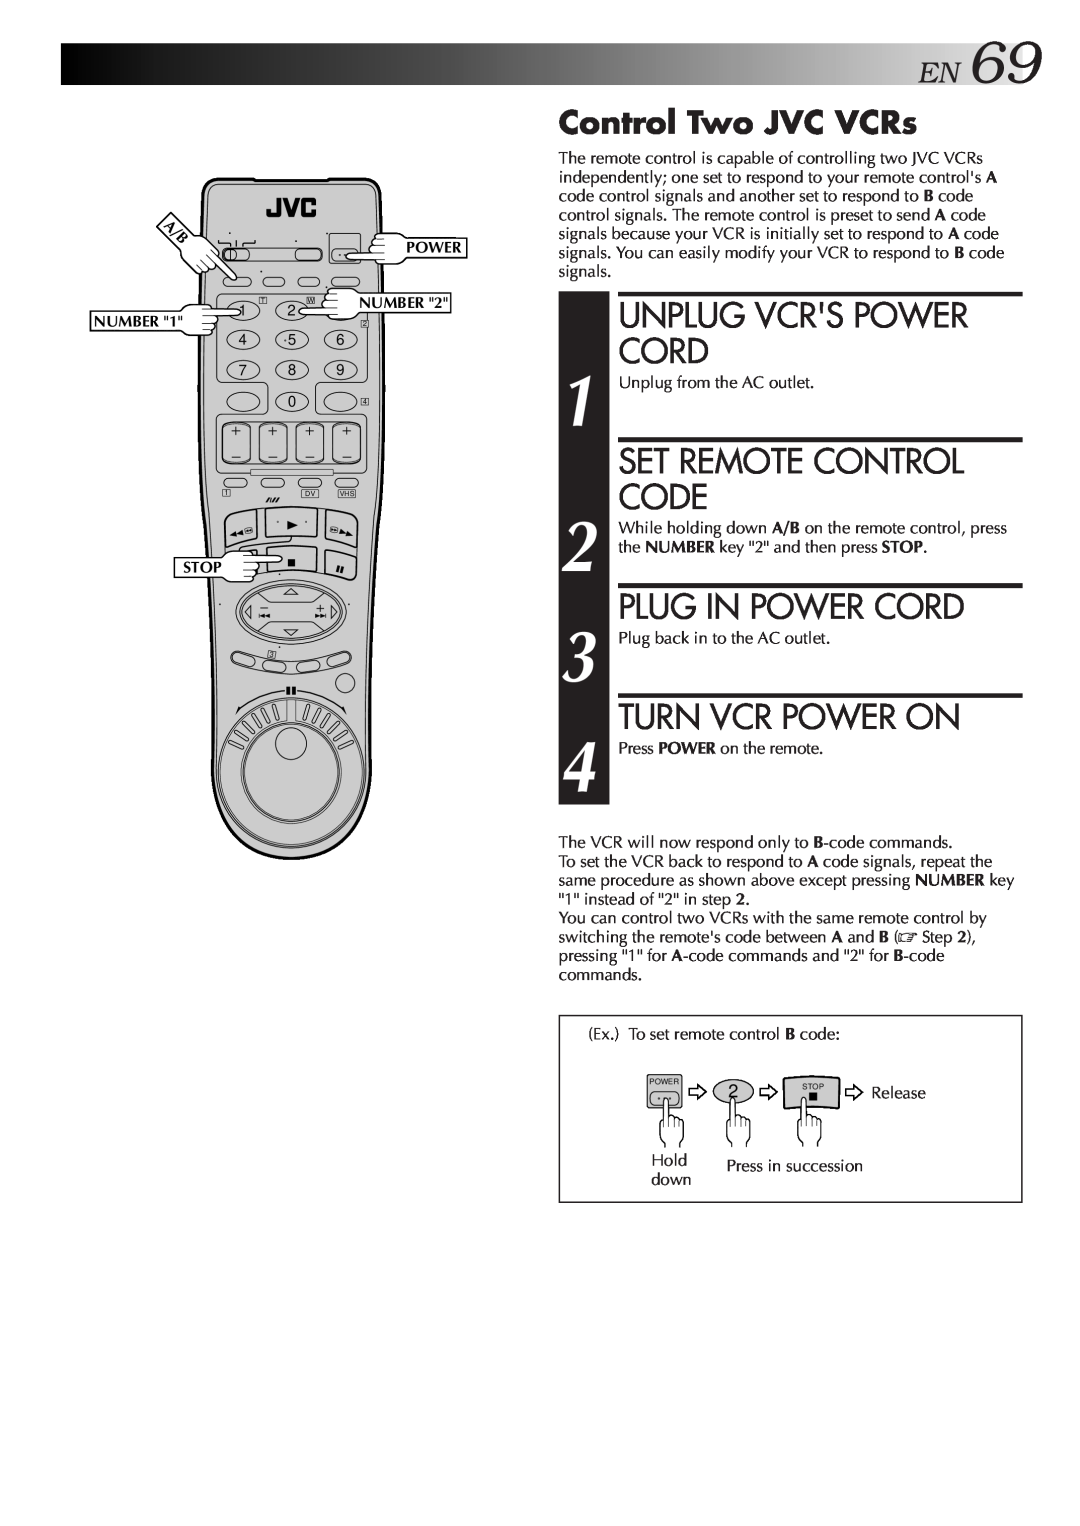 JVC Model HR-DVS1U manual Unplug Vcrs Power, Code, Plug In Power Cord, Turn Vcr Power On, Control Two JVC VCRs, EN69 